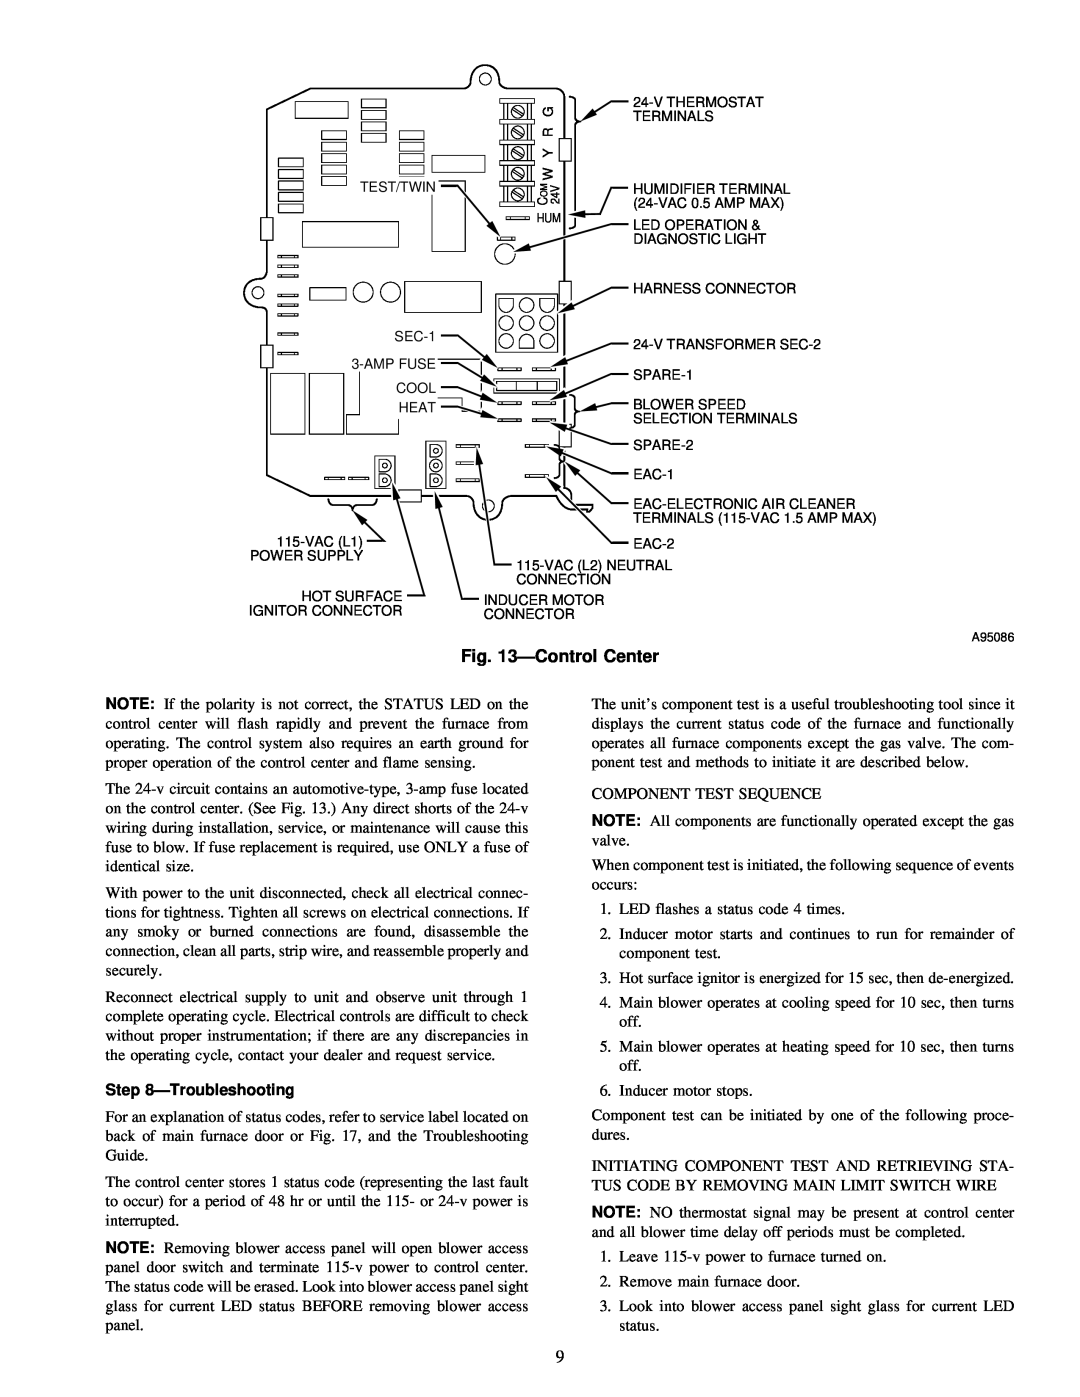 Carrier 58MCA instruction manual ÐControl Center, ÐTroubleshooting 